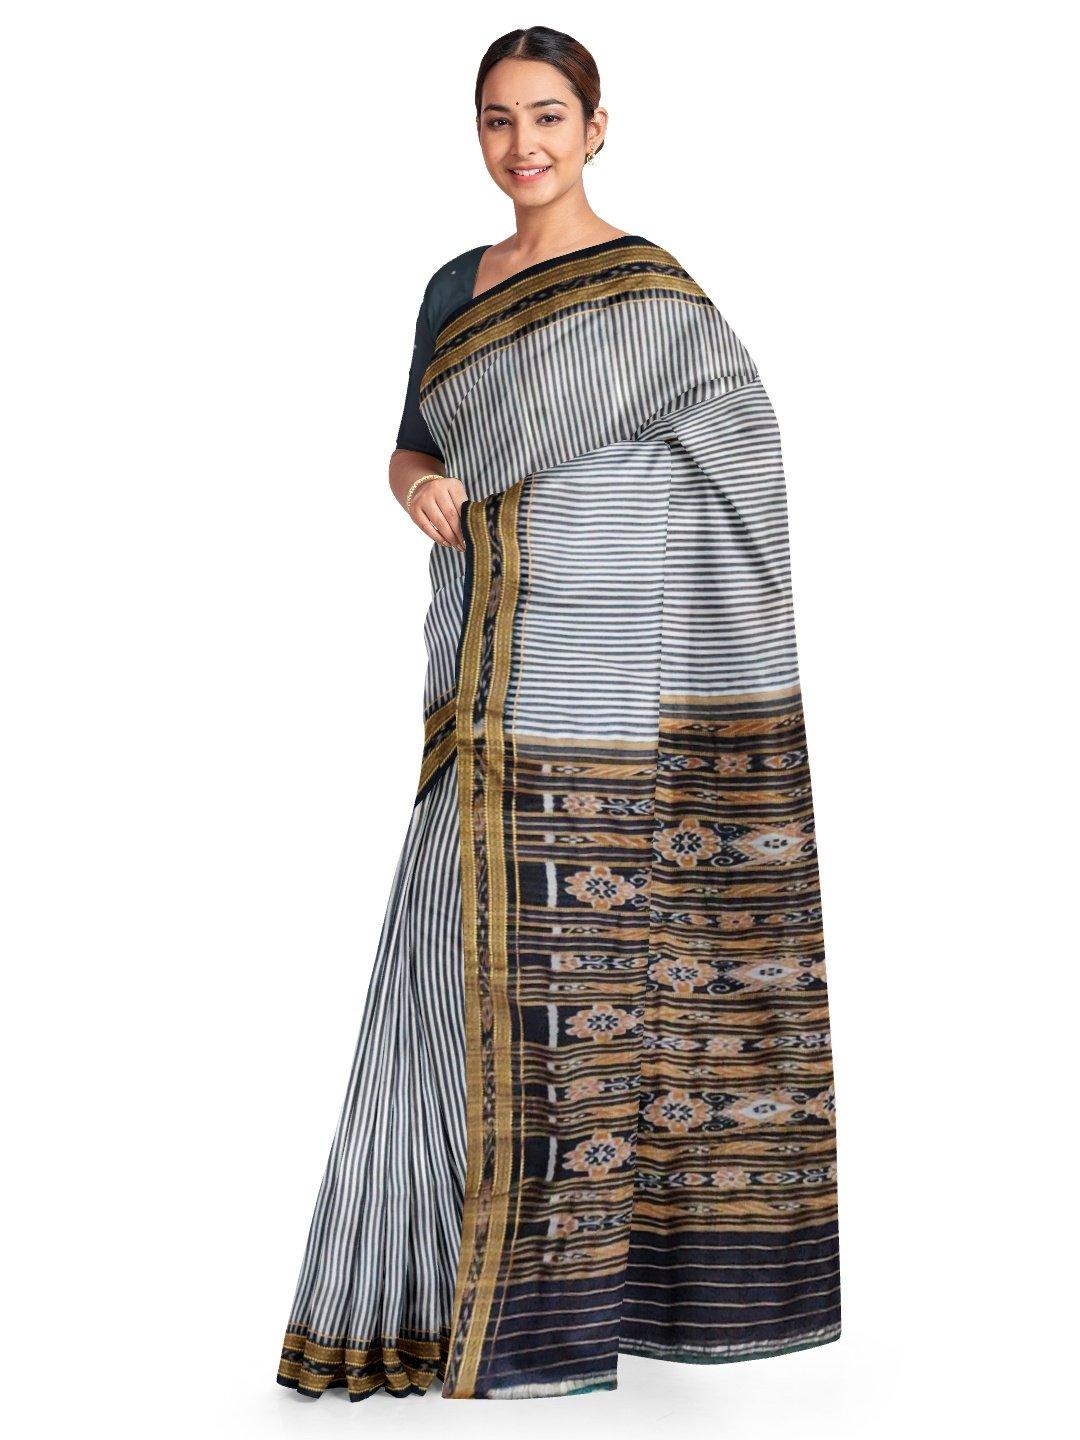 White and Black Odisha Khandua Sambalpuri Silk Saree - Crafts Collection